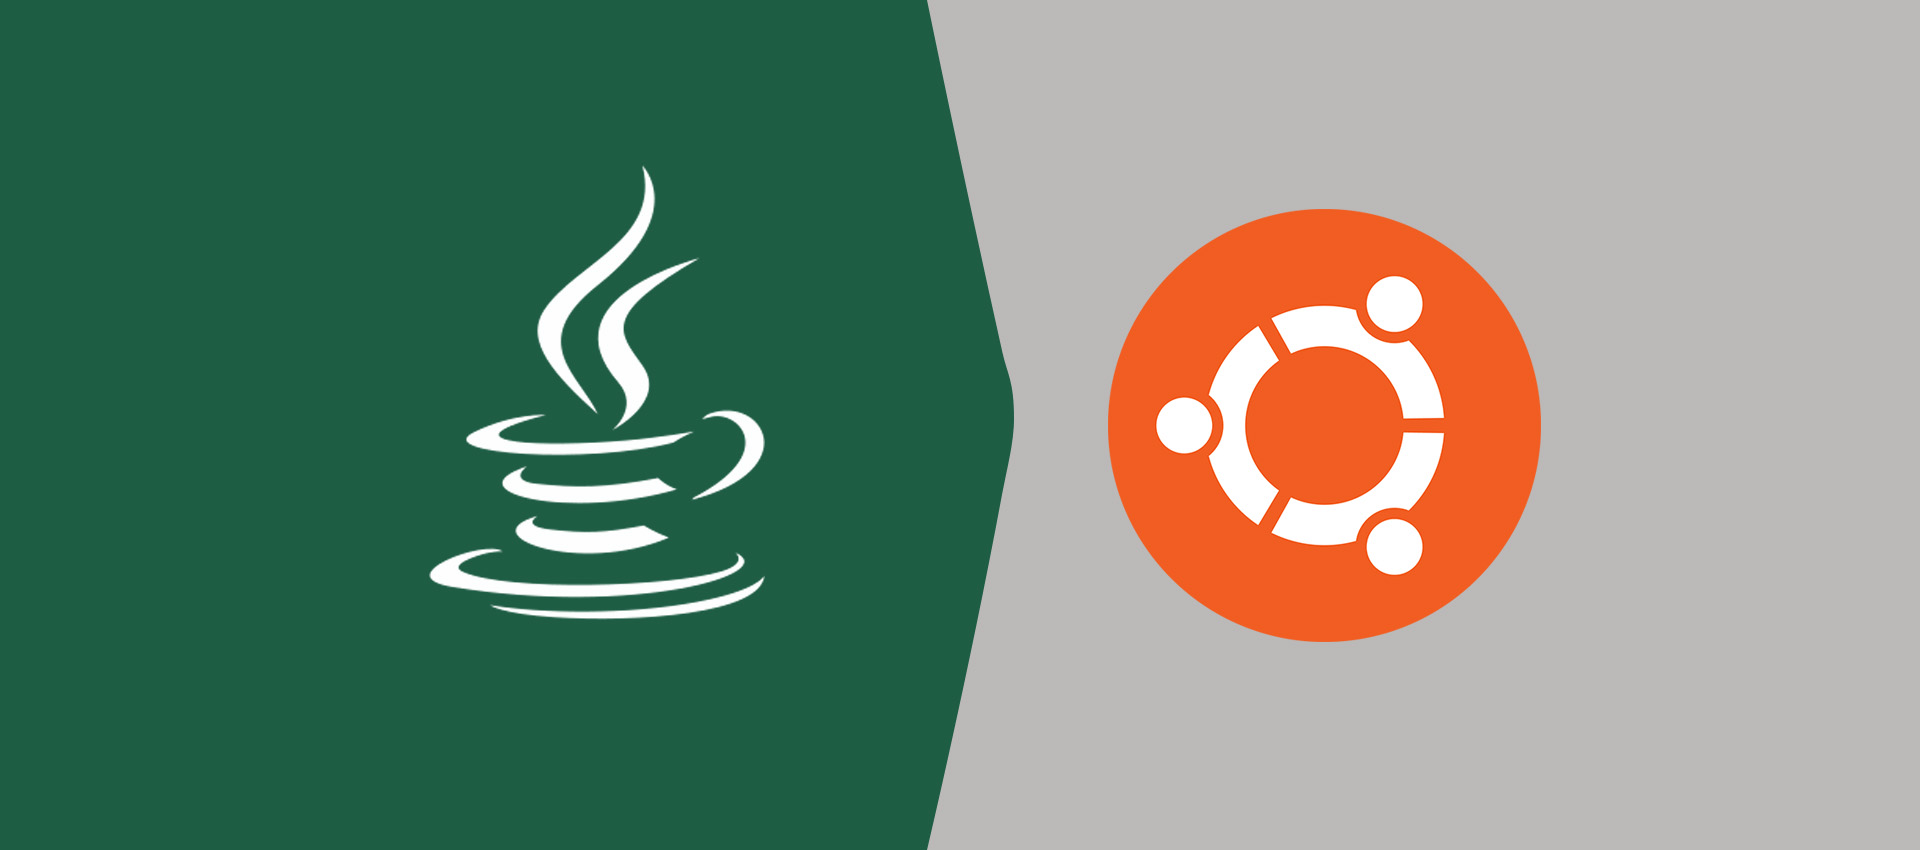 How To Install Java 11 On Ubuntu